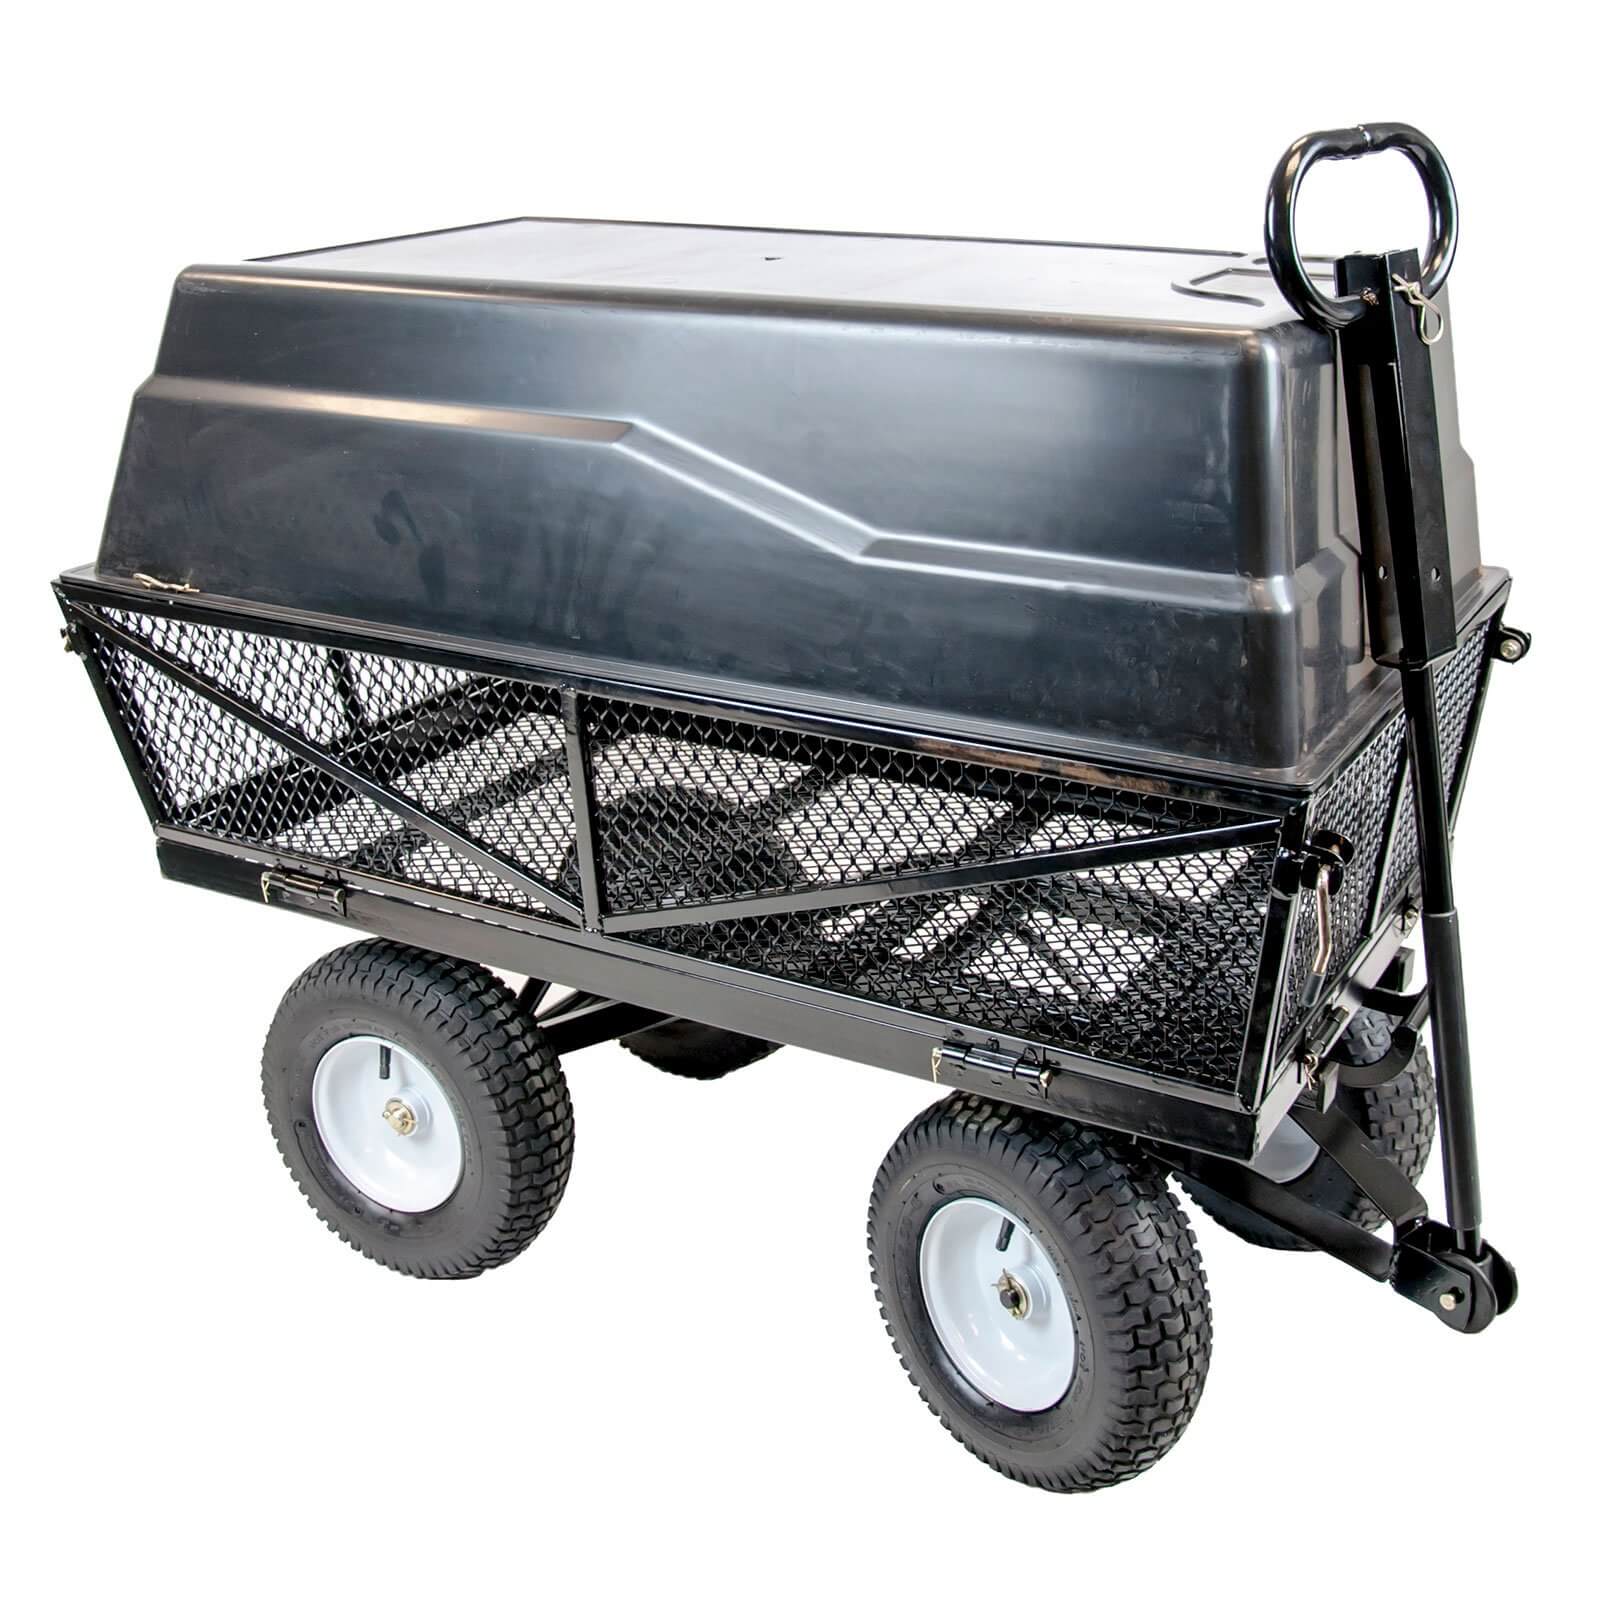 Handy Multi-Purpose Garden Cart - 300kg